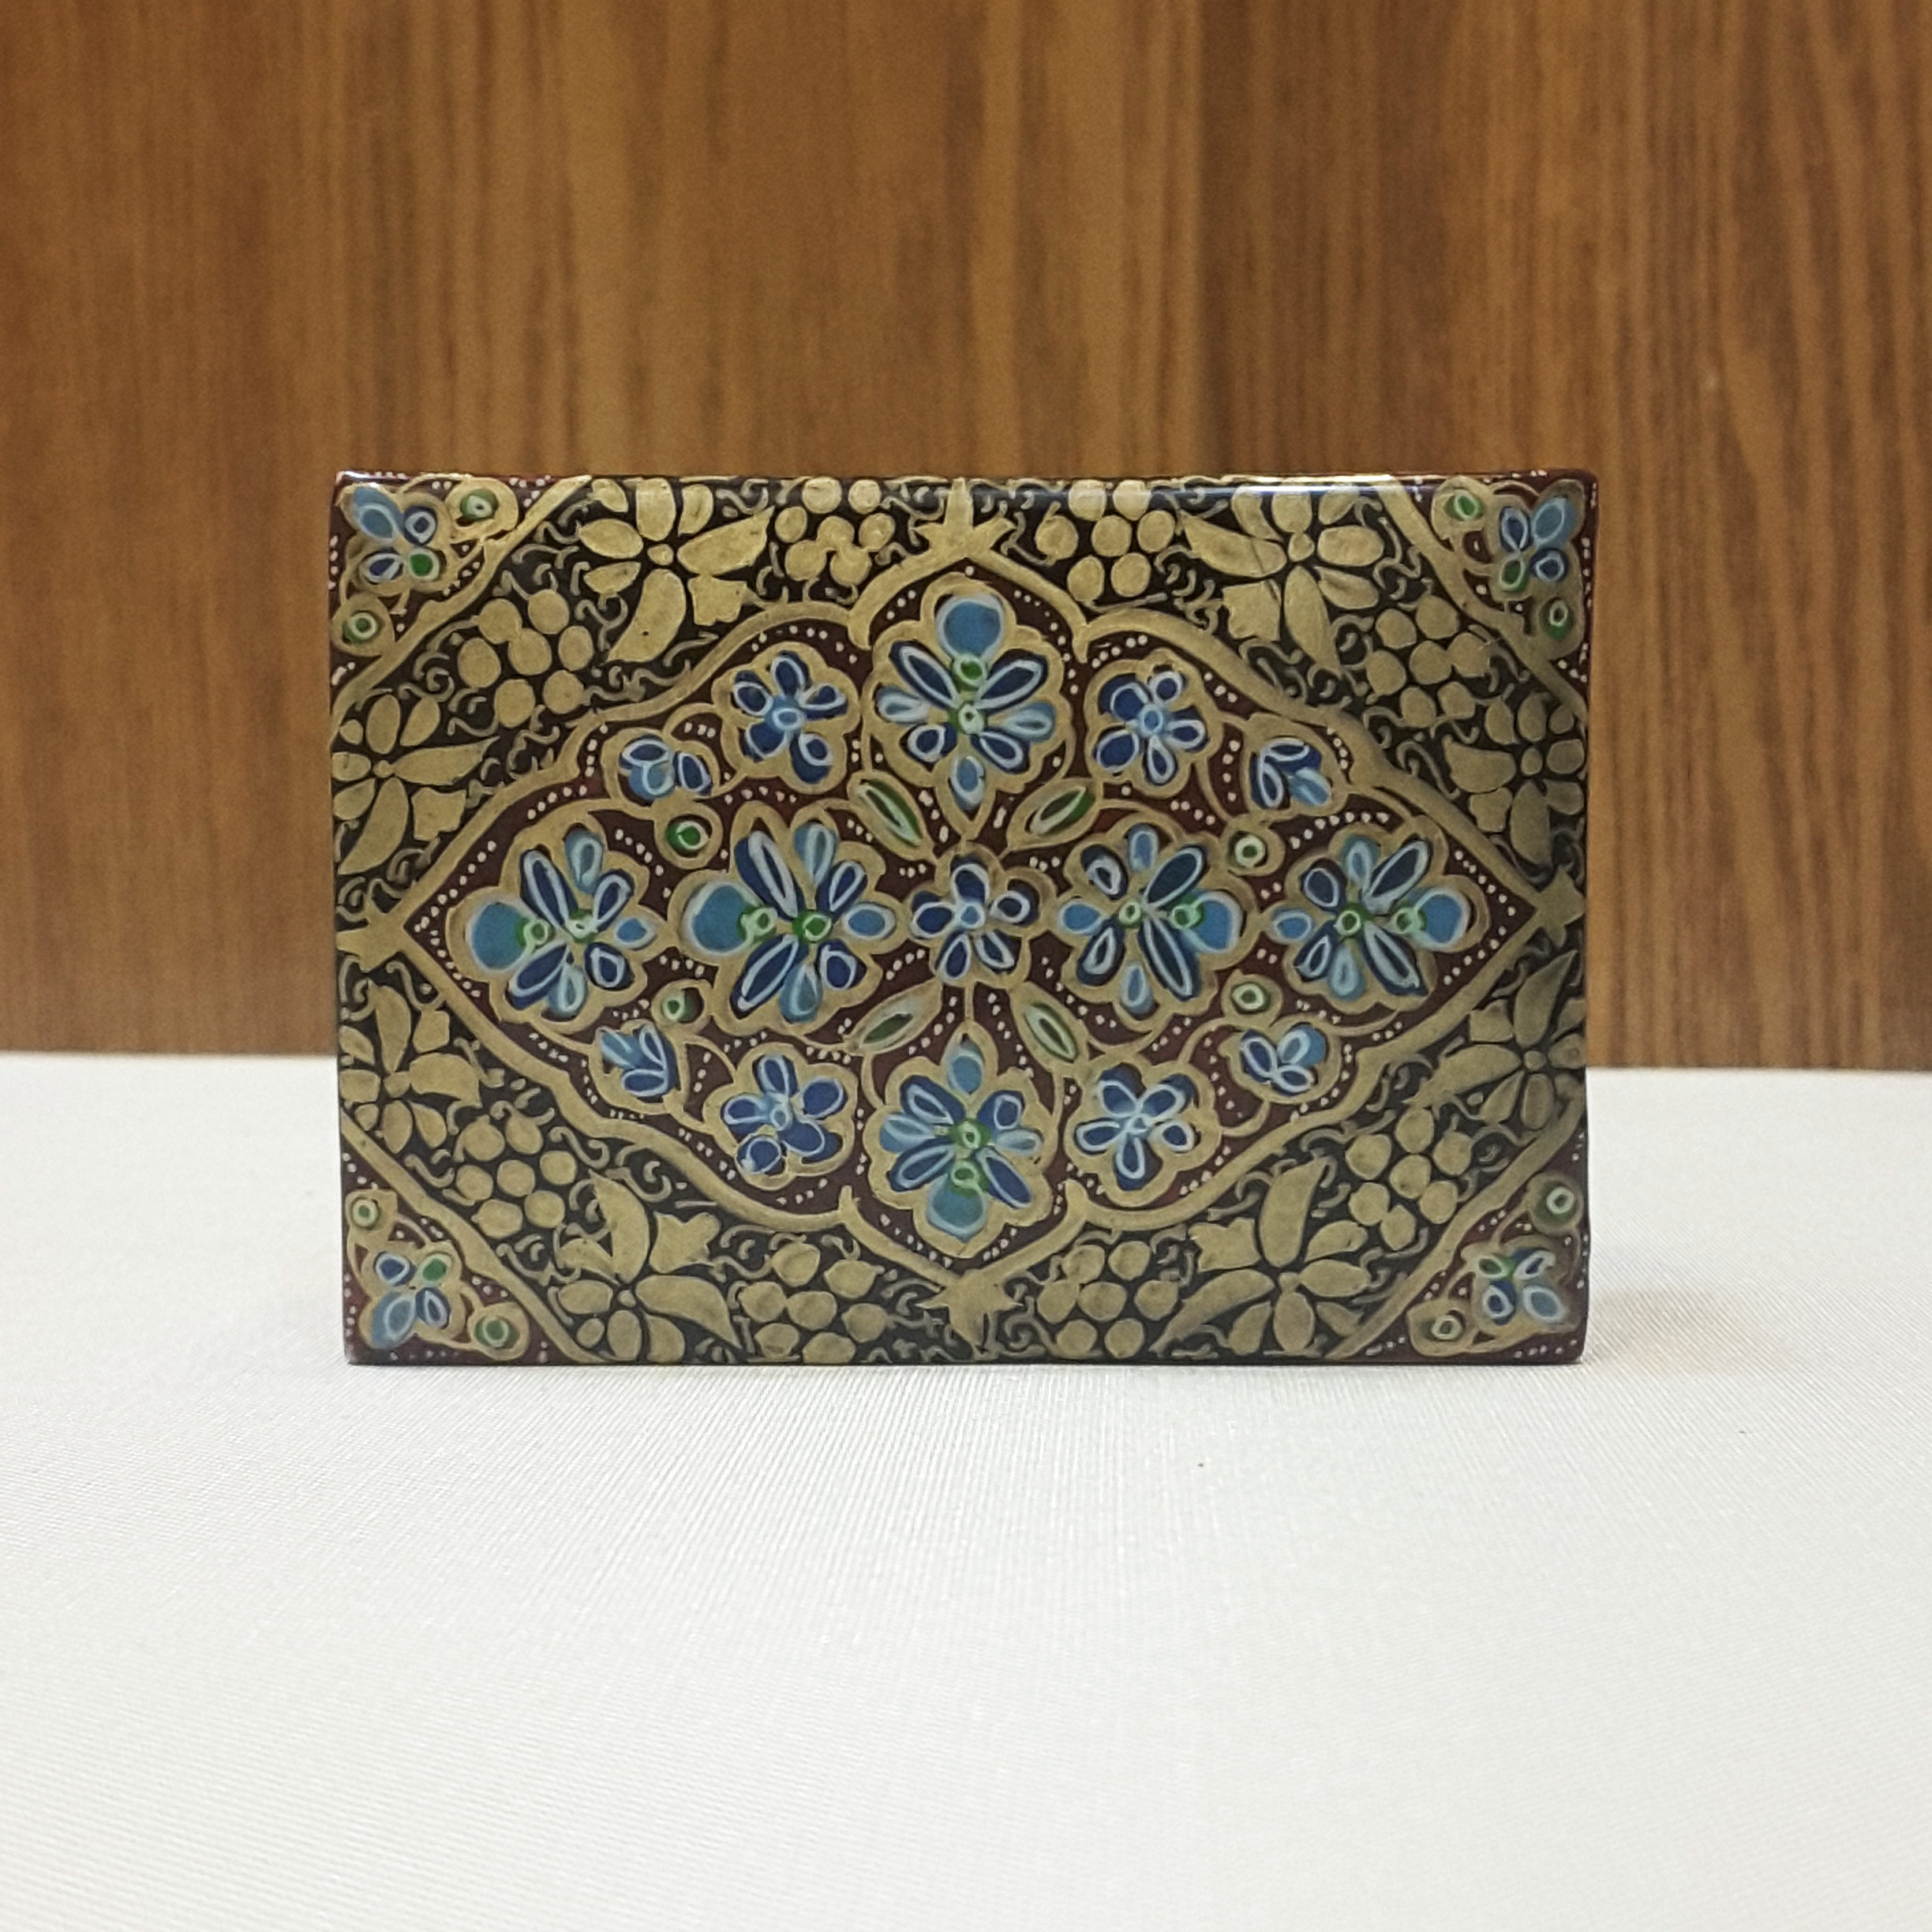 Persian crafts - Jewelry mini box with eslimi painting - 7 cm | Taha ...